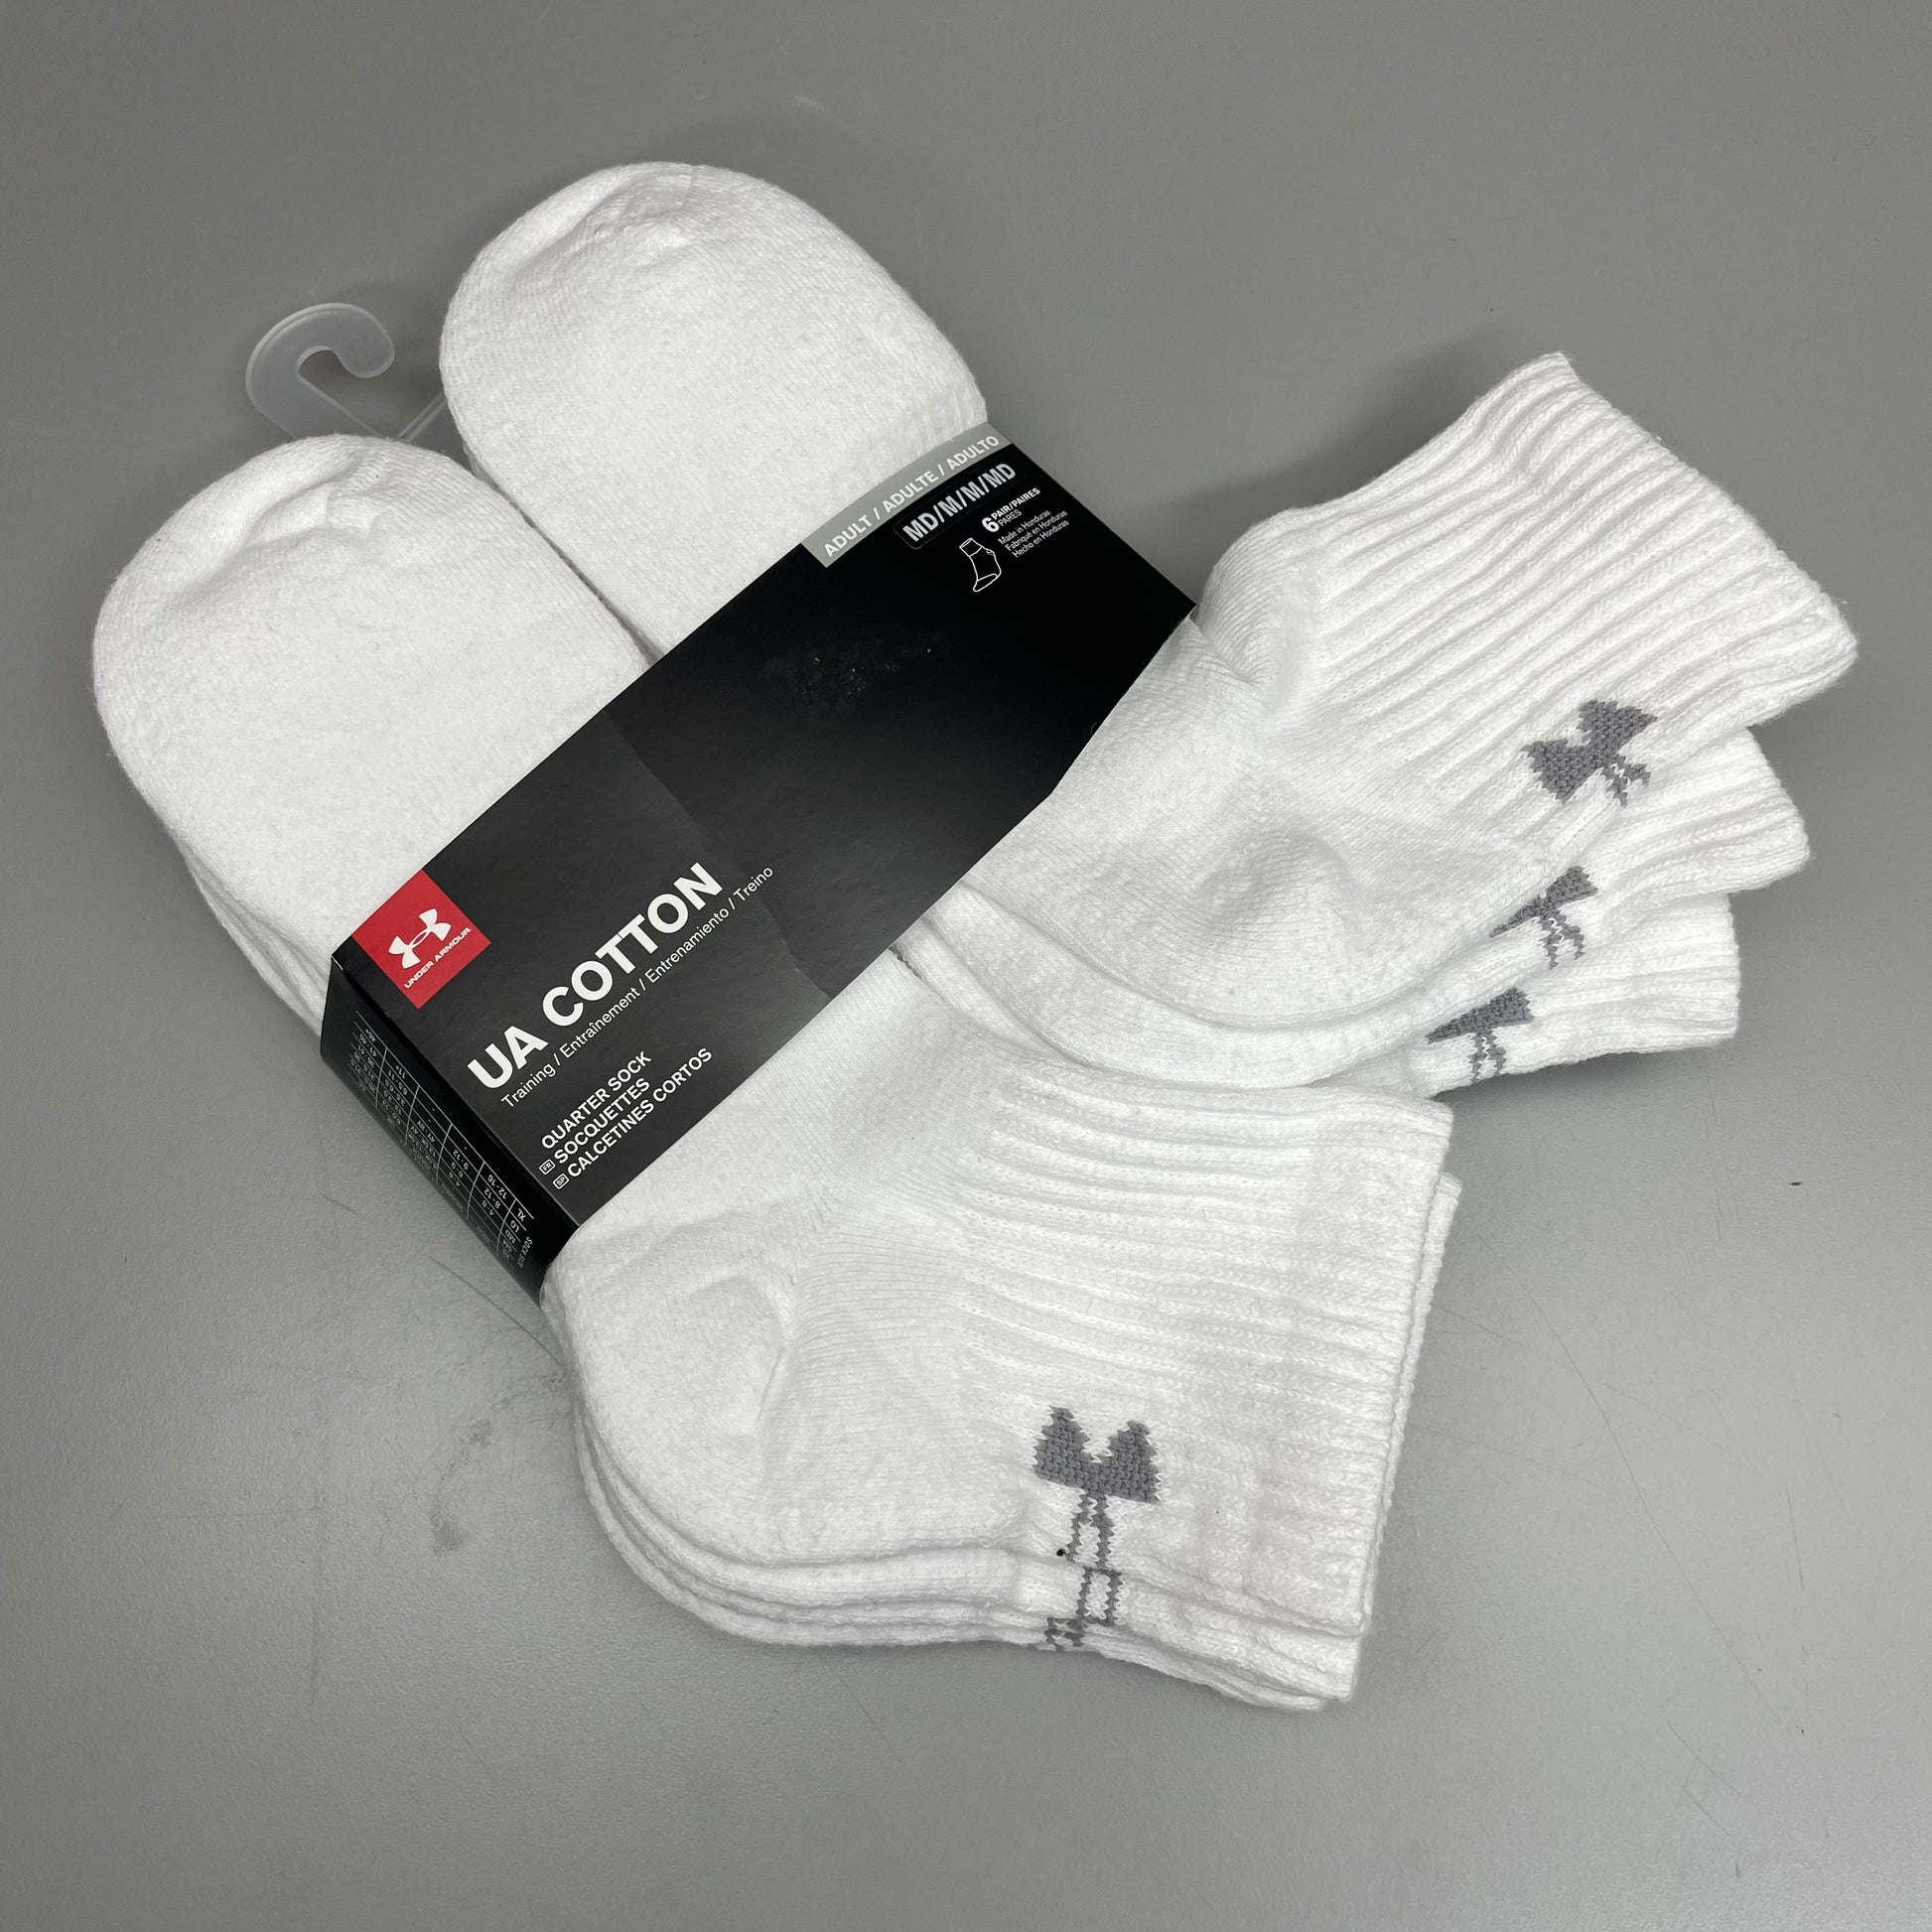 Unisex UA Training Cotton Quarter 6-Pack Socks